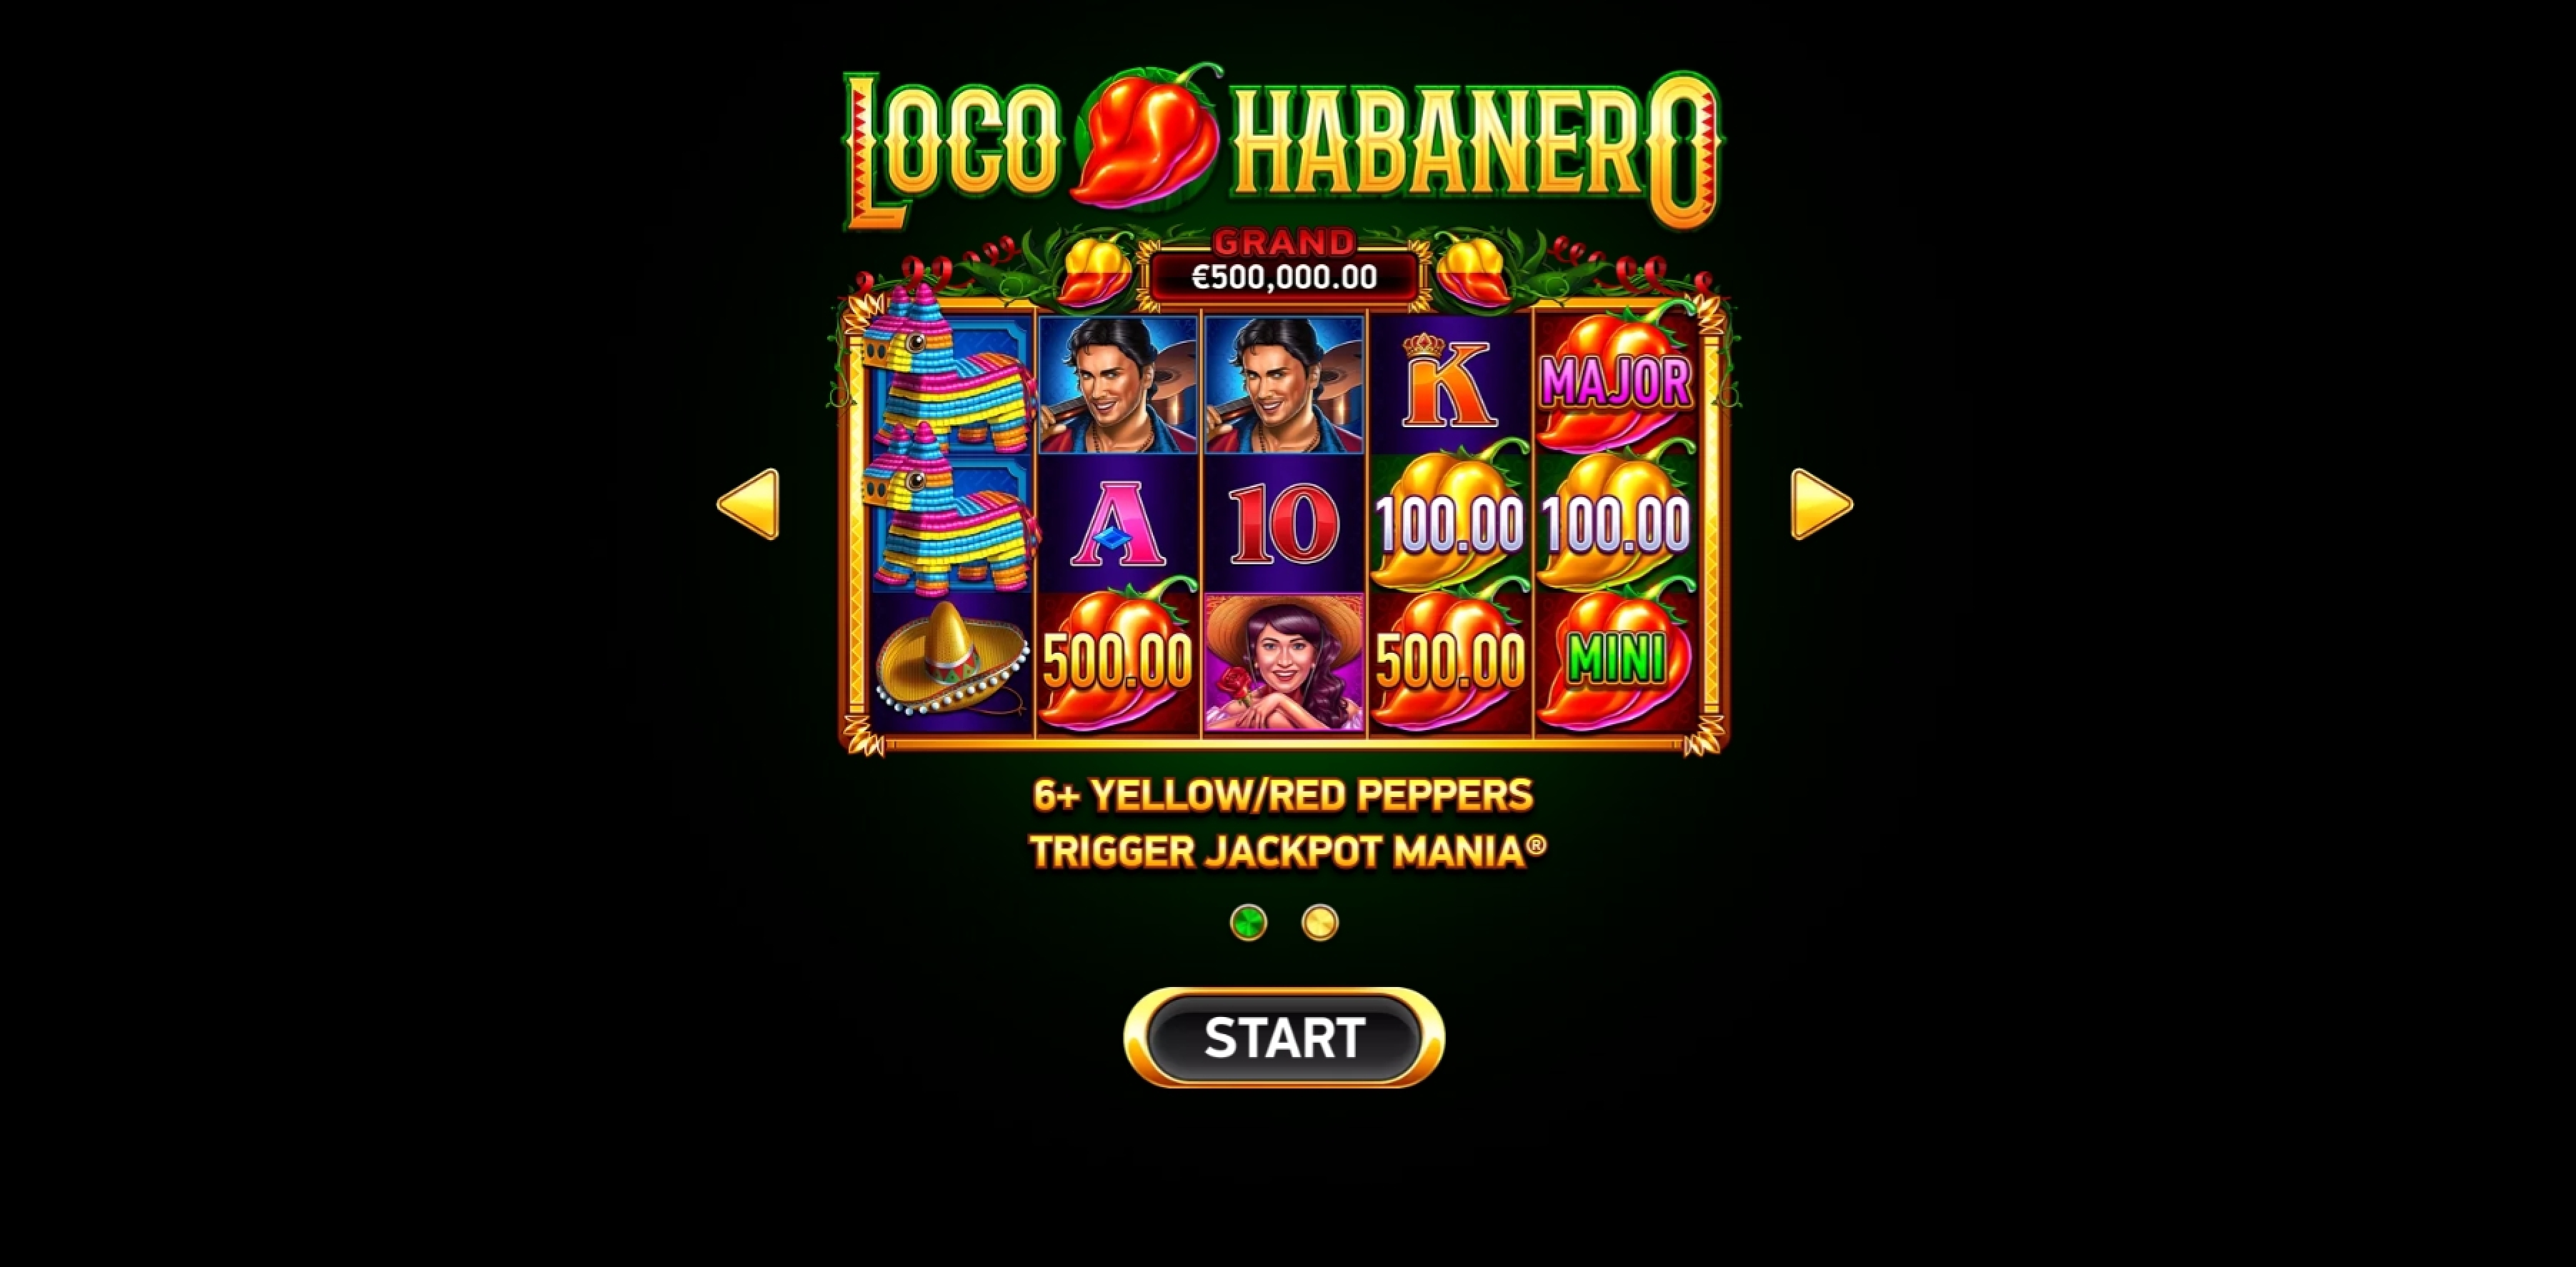 Play Loco Habanero Free Casino Slot Game by Ruby Play